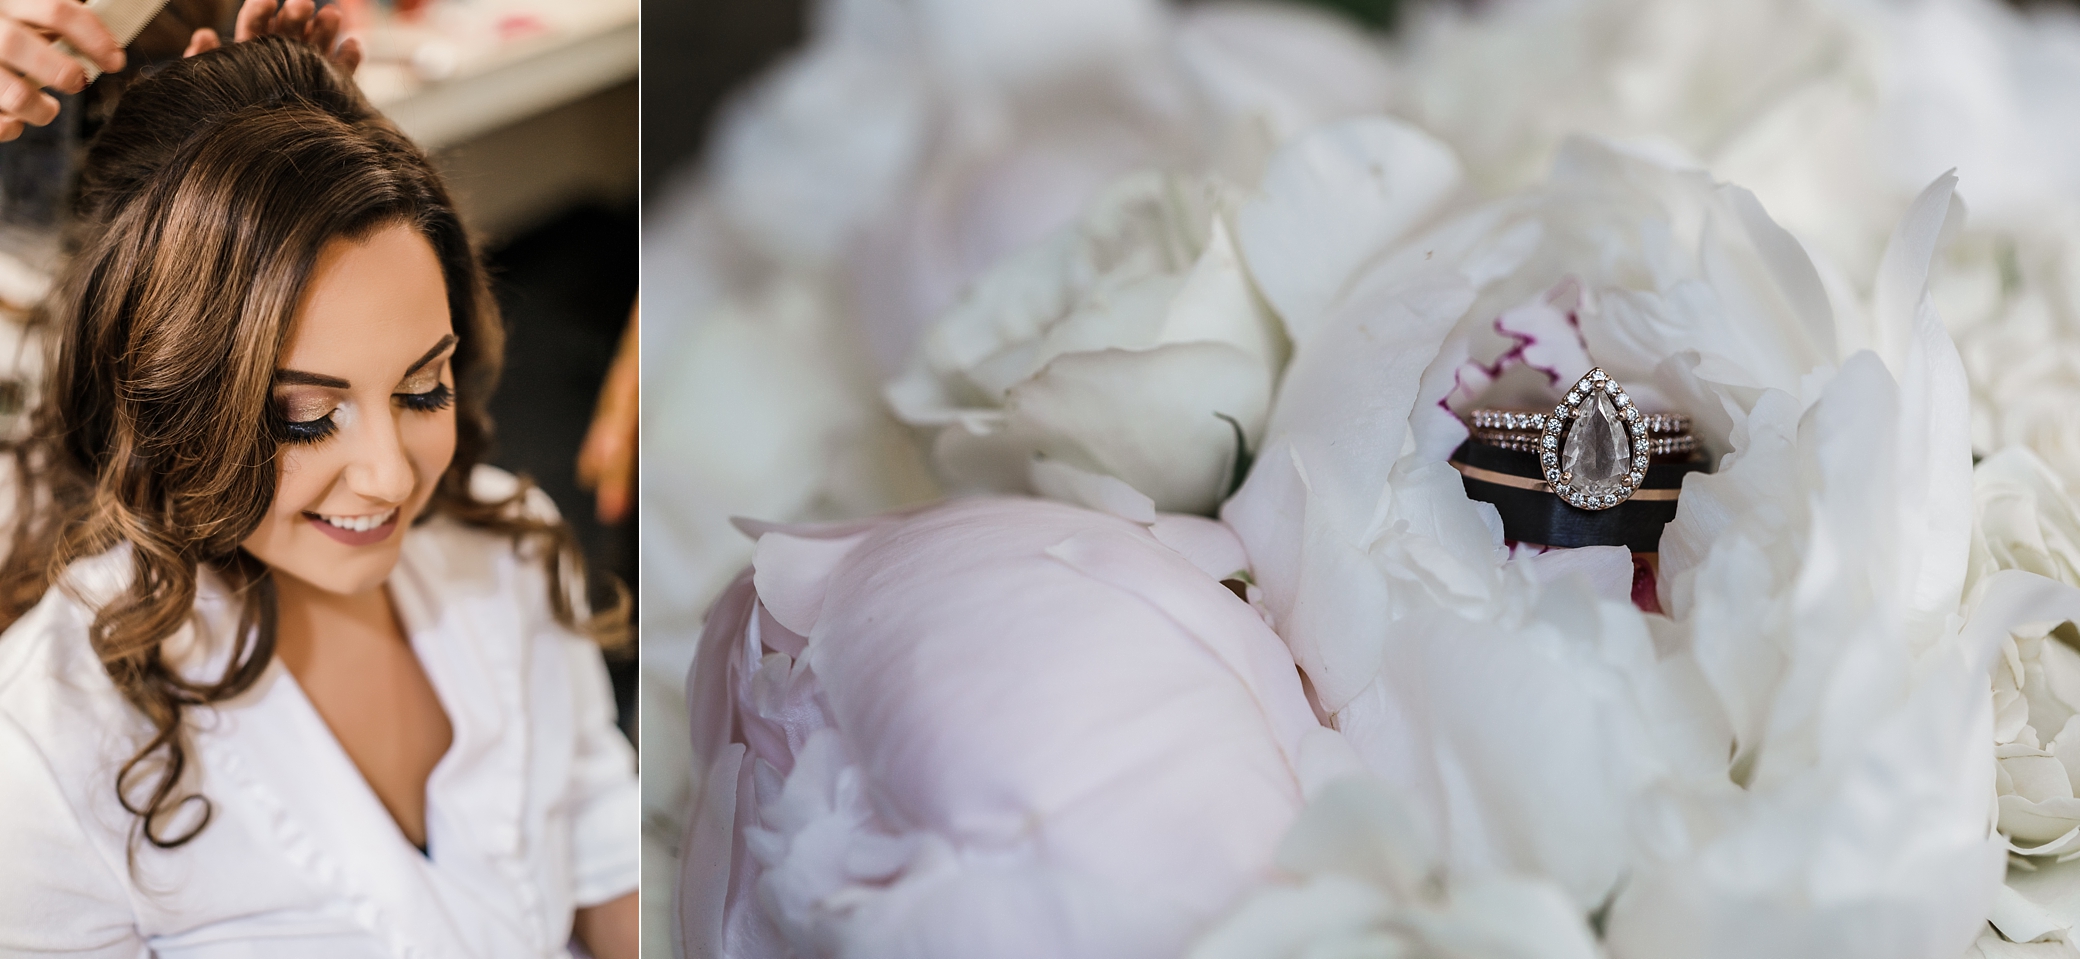 Bridal details on wedding day | Megan Montalvo Photography 